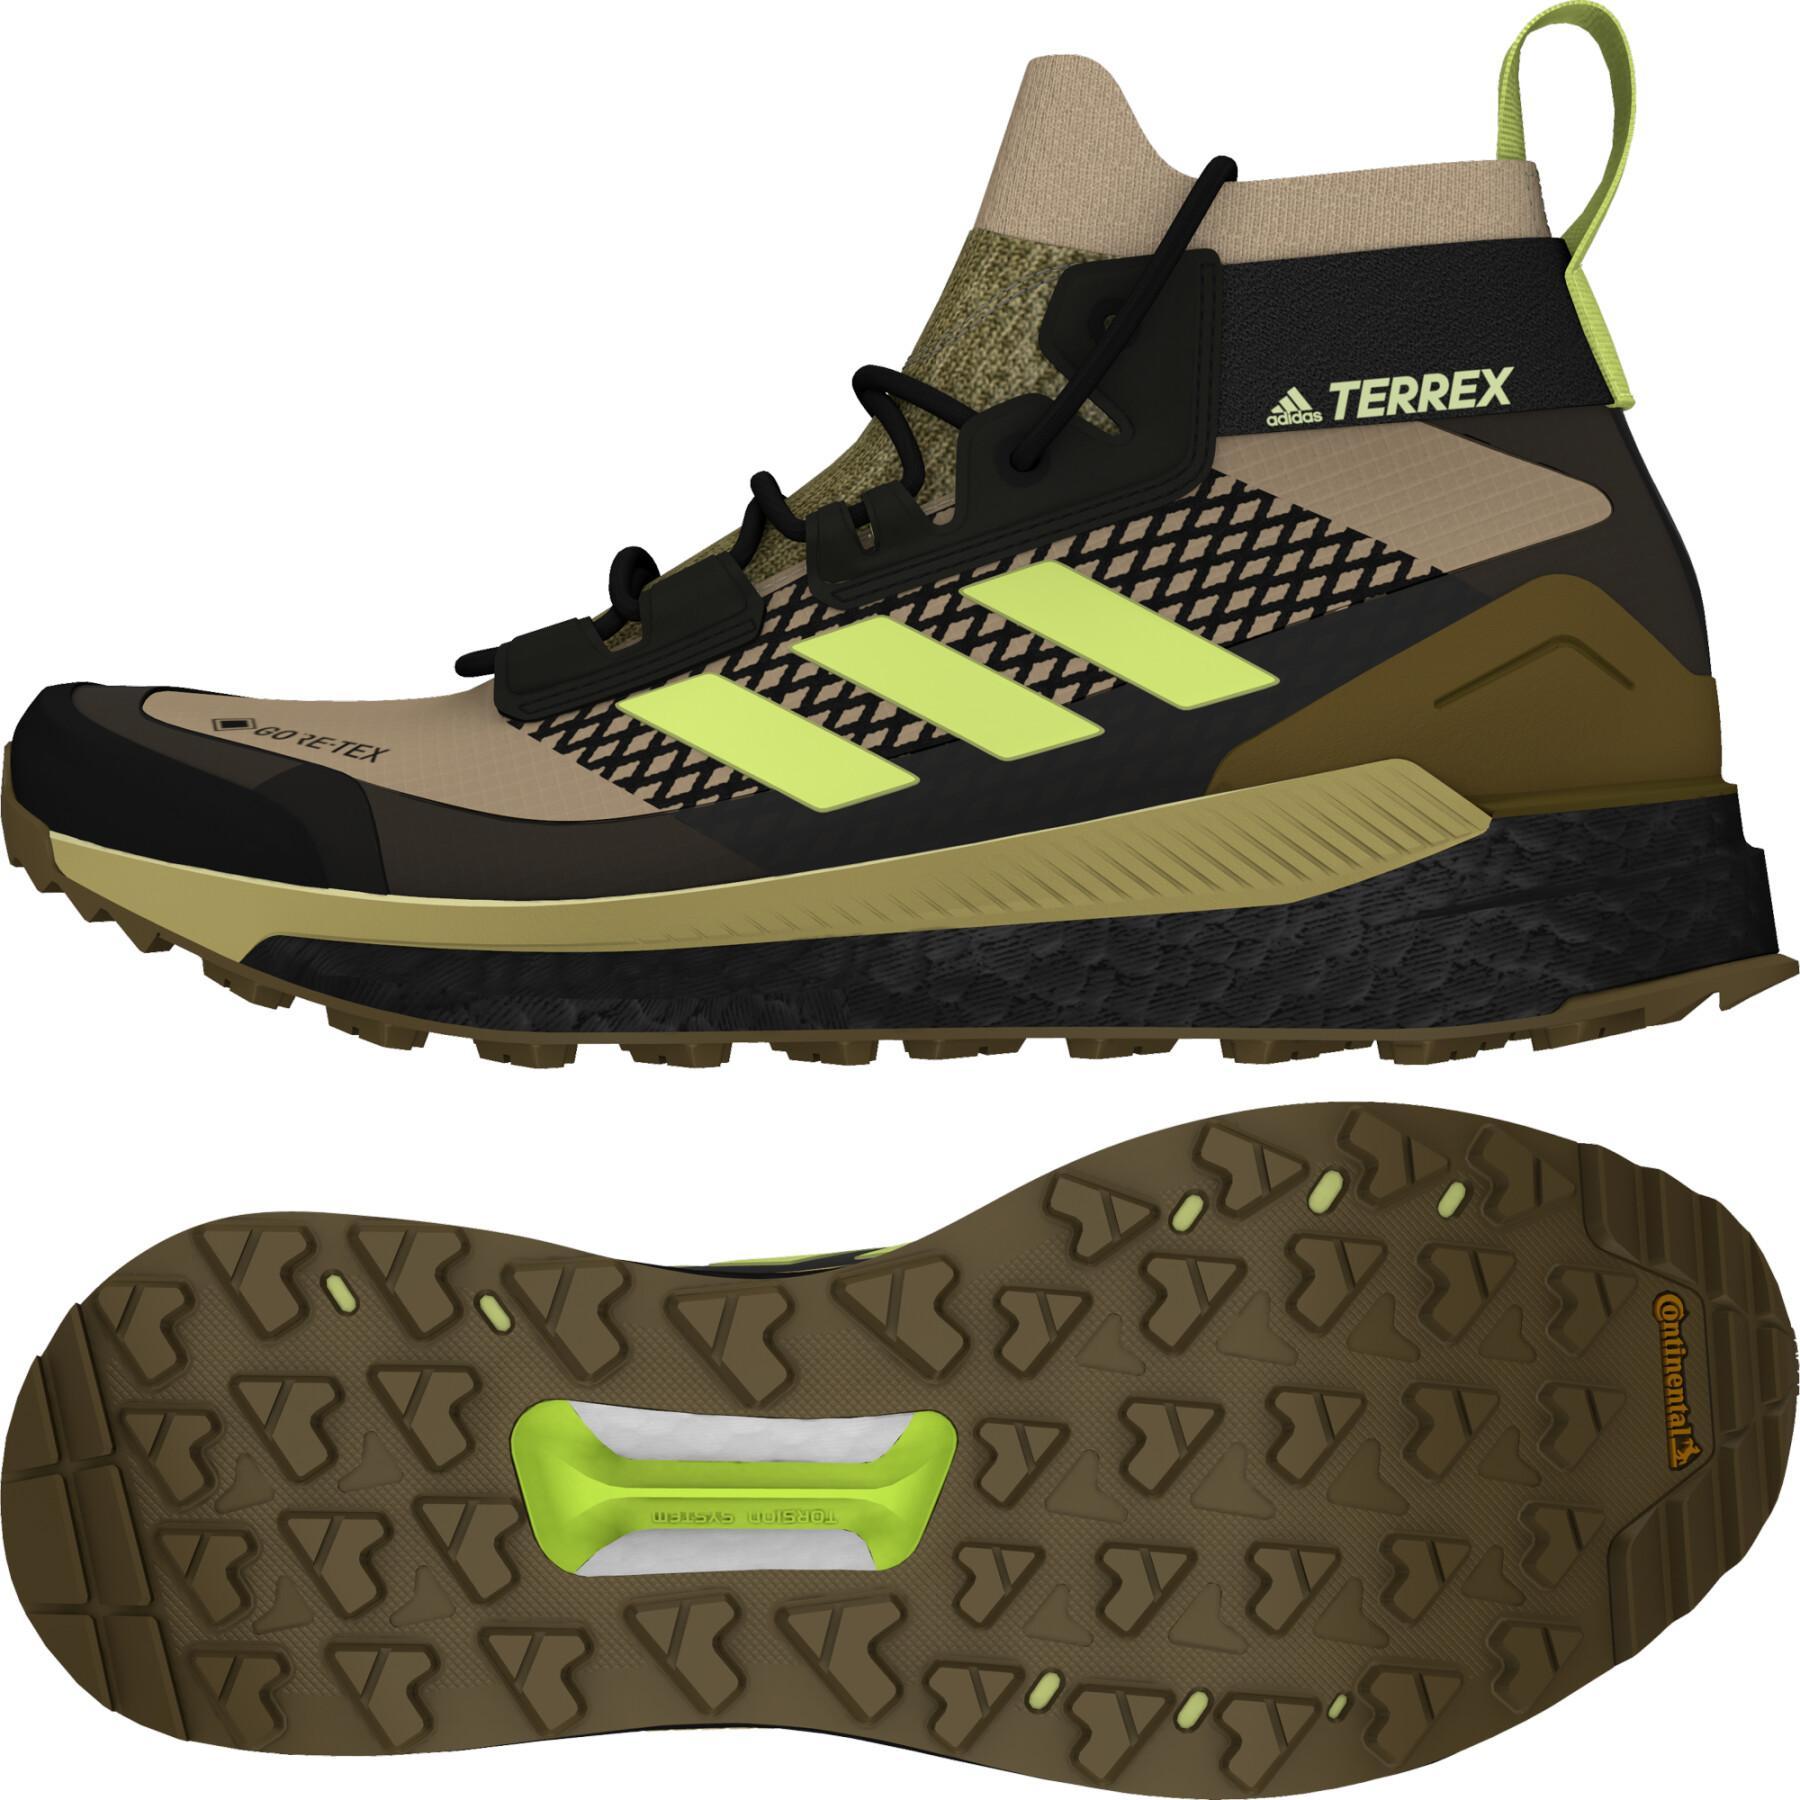 Zapatos adidas Terrex Free Hiker Gtx